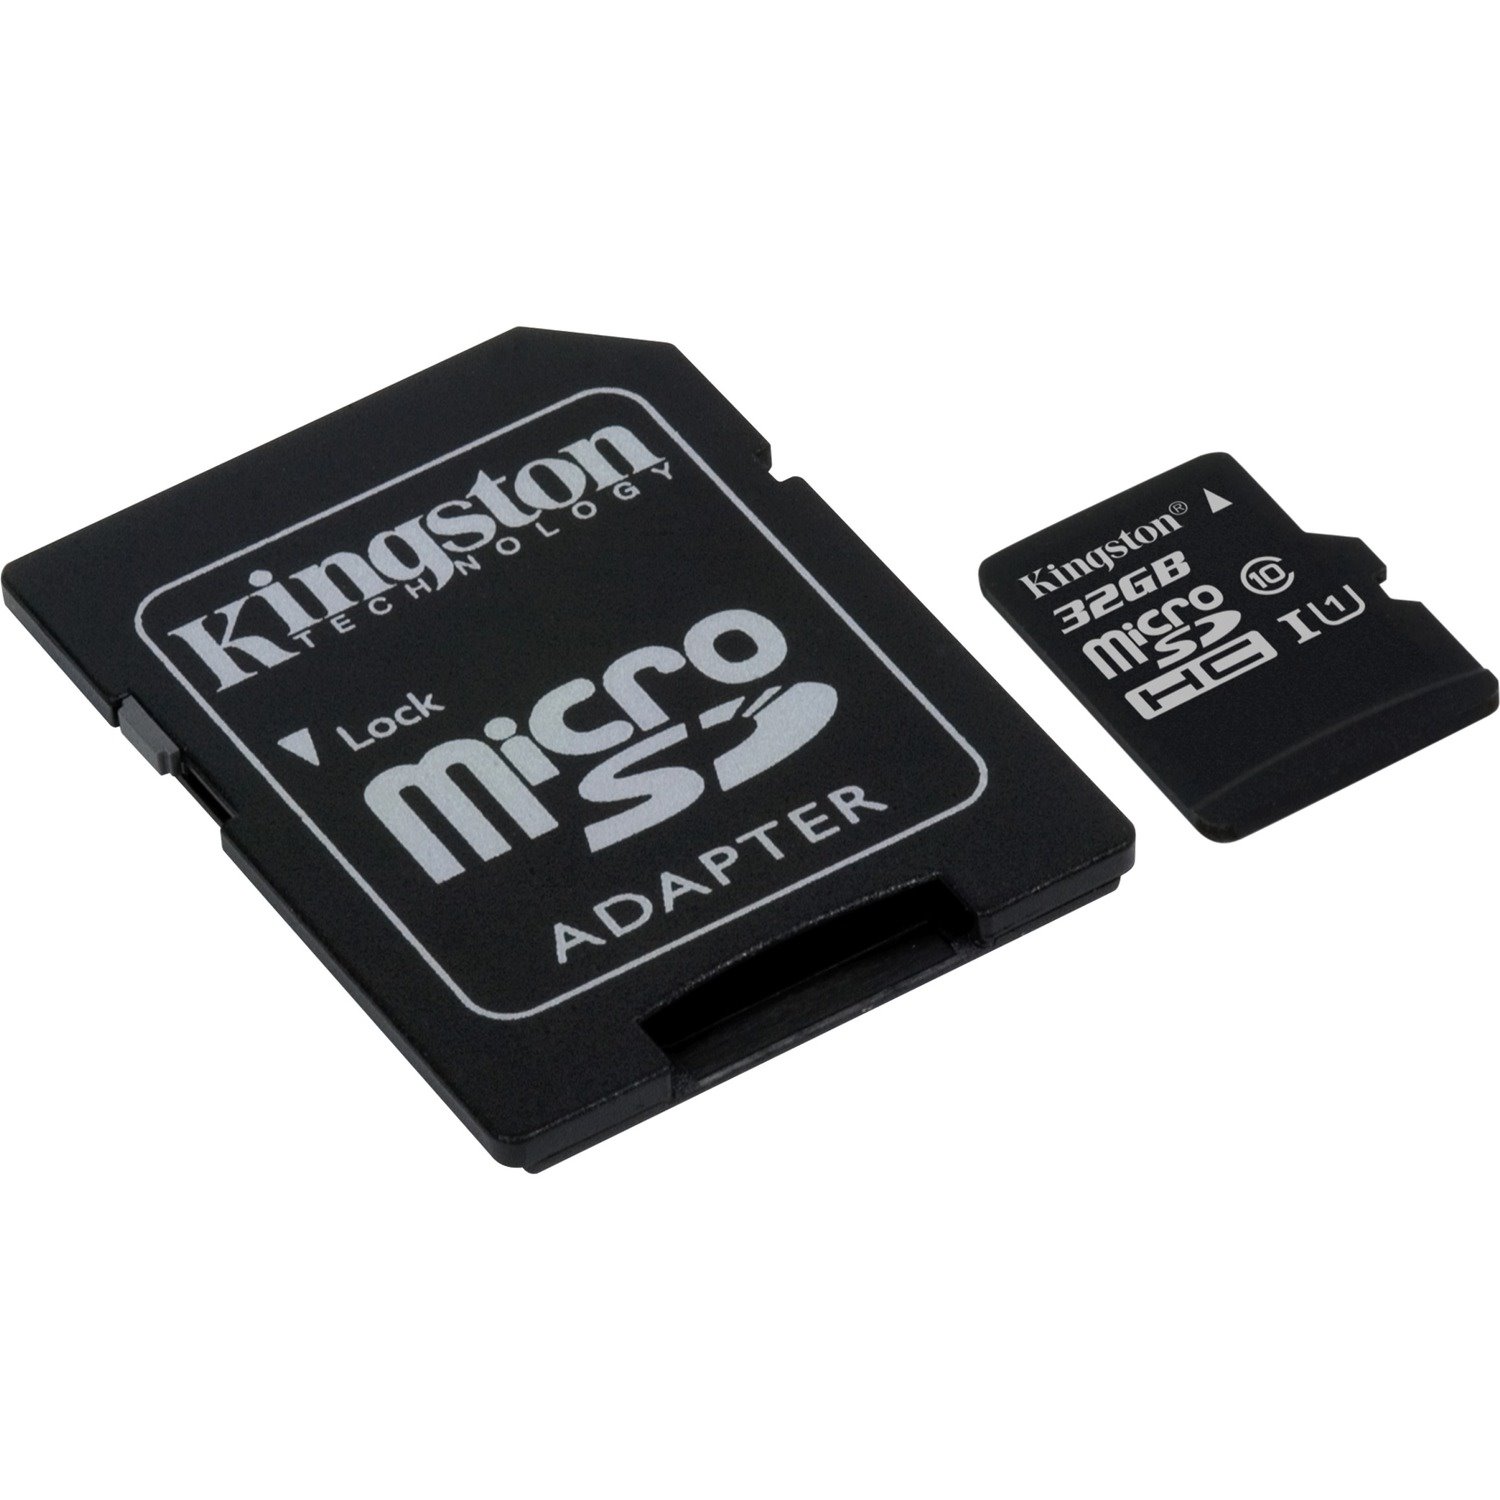 Kingston 32 GB Class 10/UHS-I microSDHC